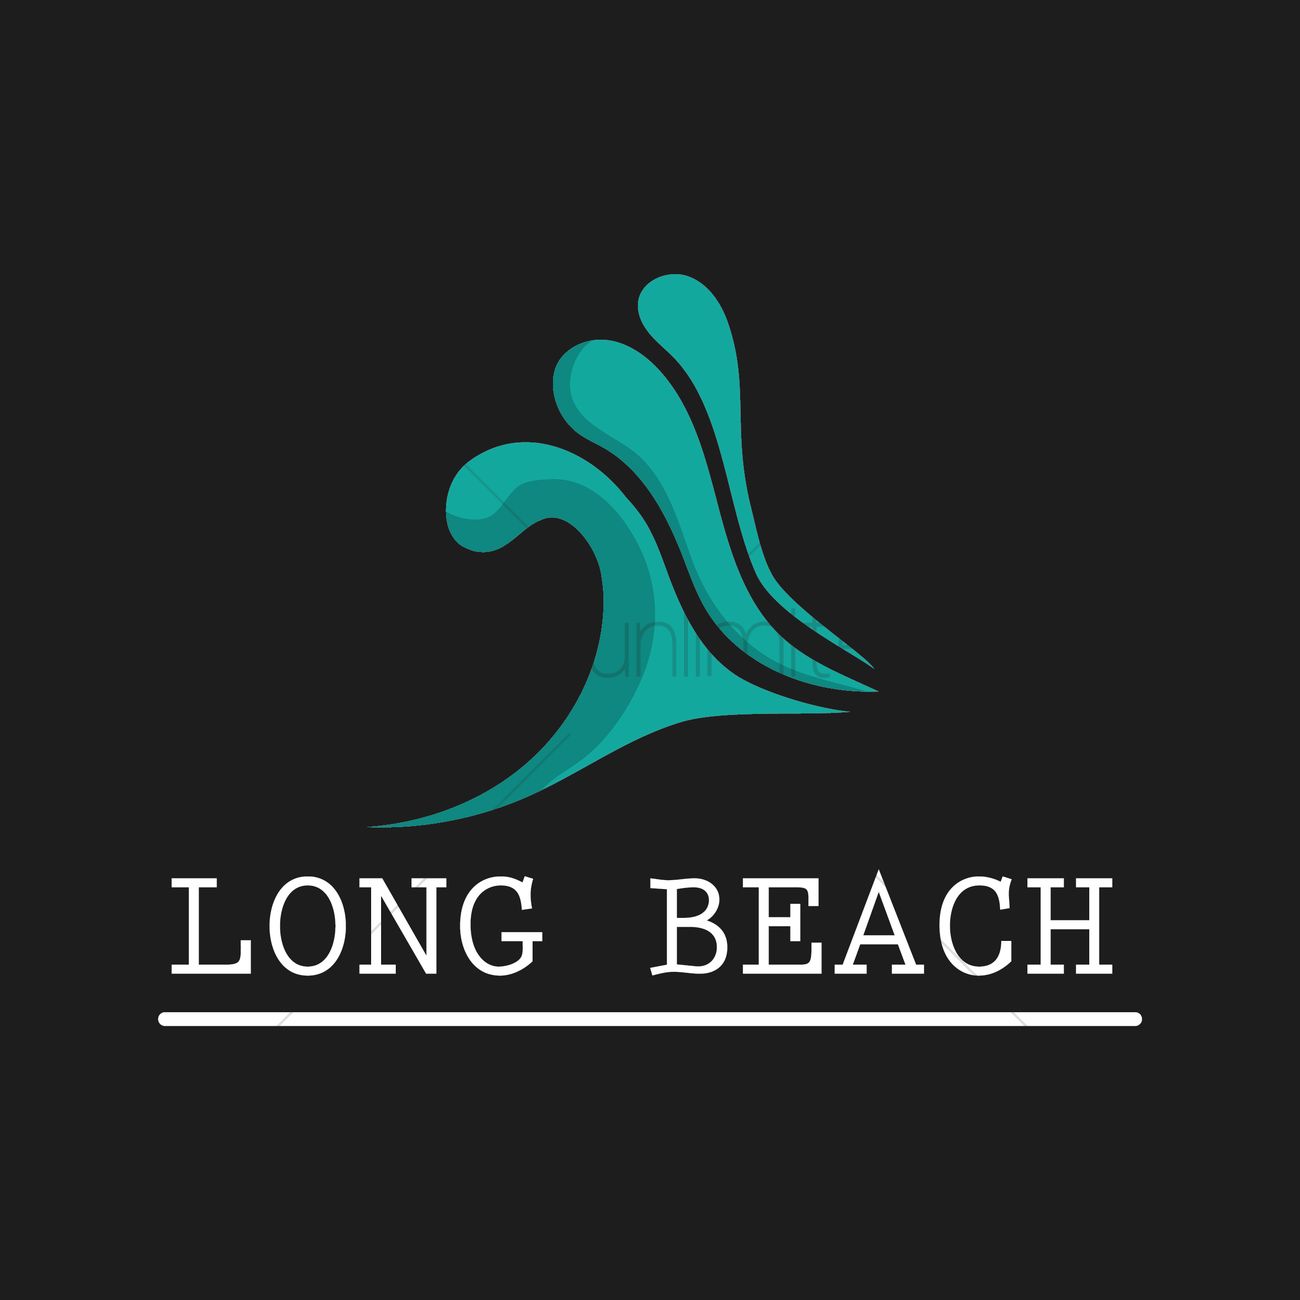 Long Beach Background